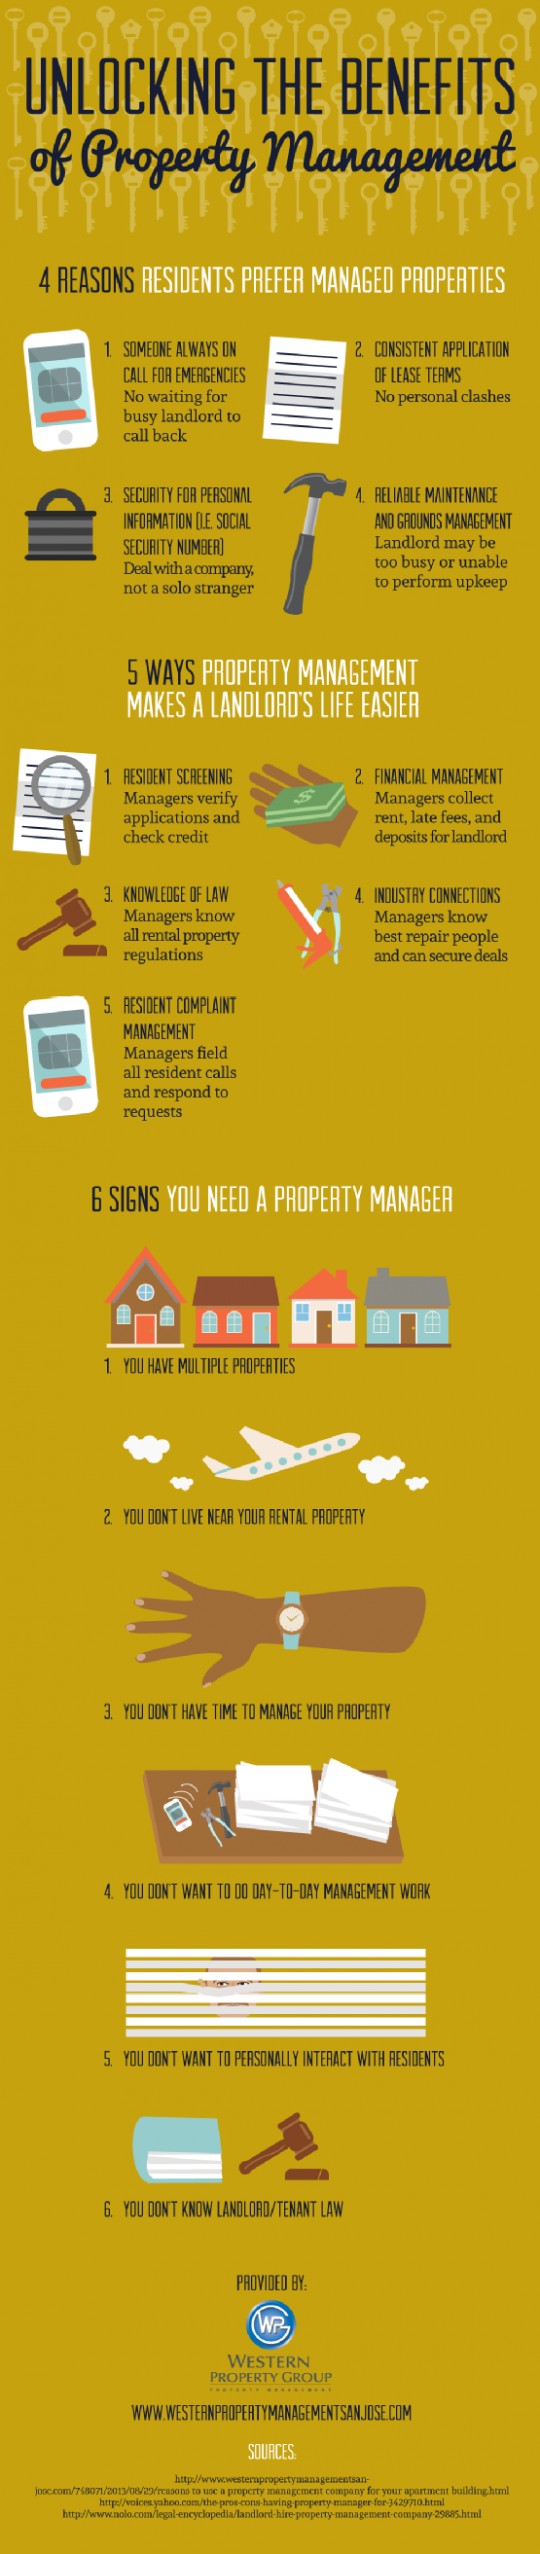 Unlocking the Benefits of Property Management